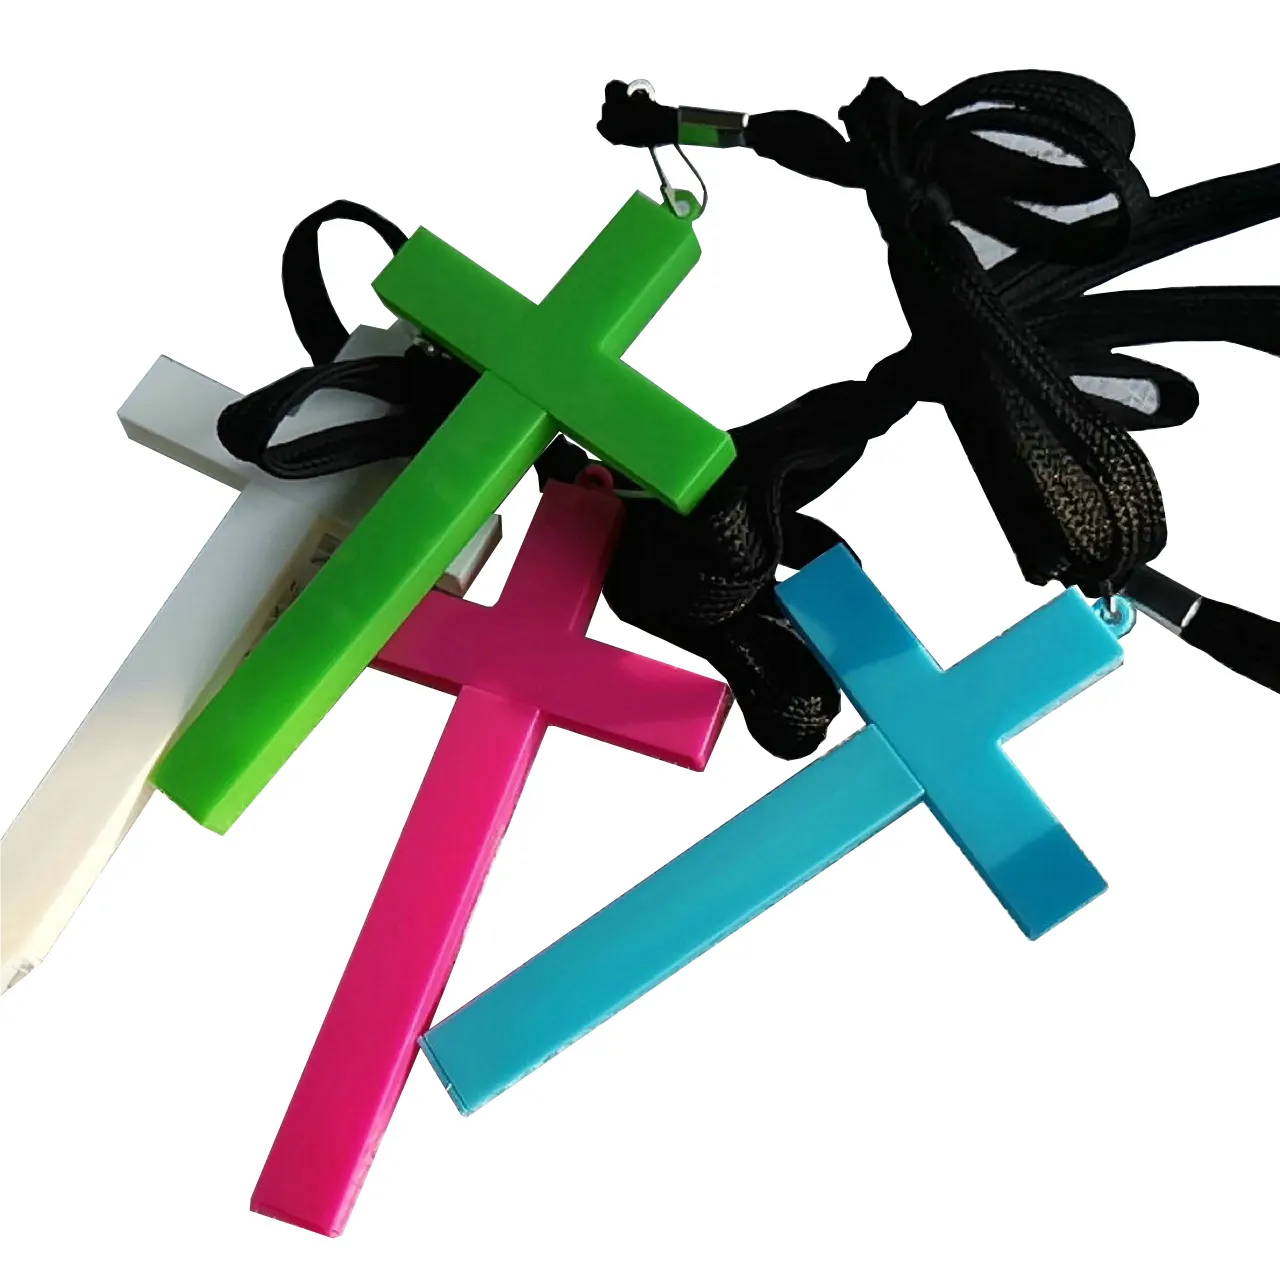 Catholic school church stationery supplies plastic ball pen crucifix cross promotion pen with custom logo